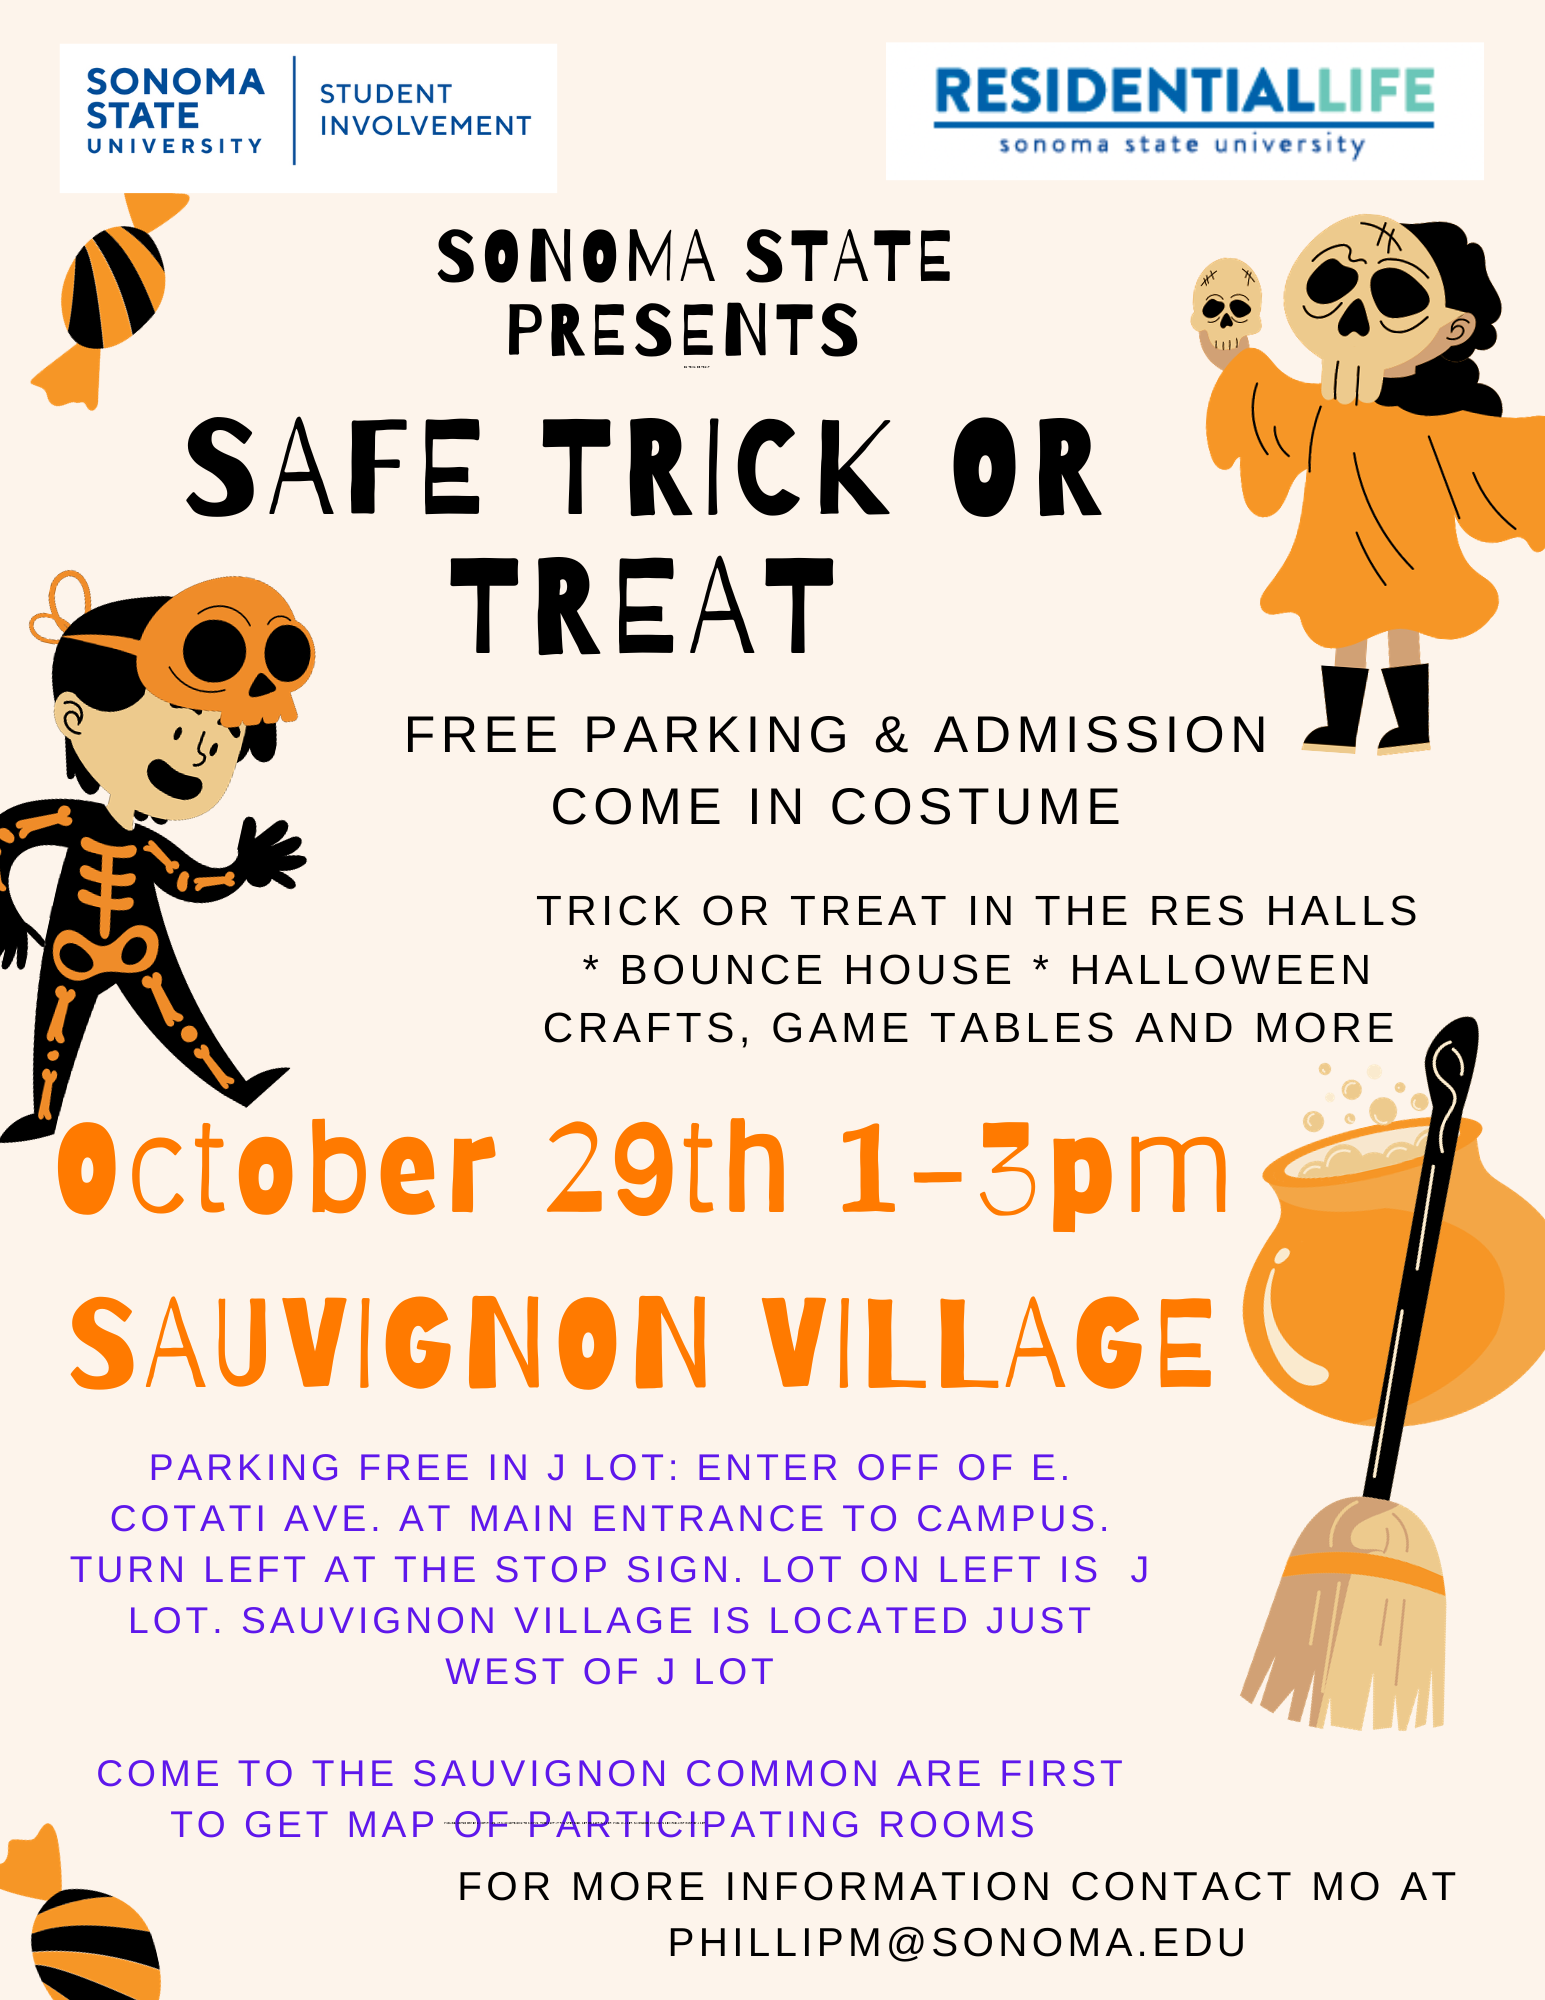 Sonoma State presents Safe Trick or Treat October 29th 1 to 3 pm in Sauvignon Village